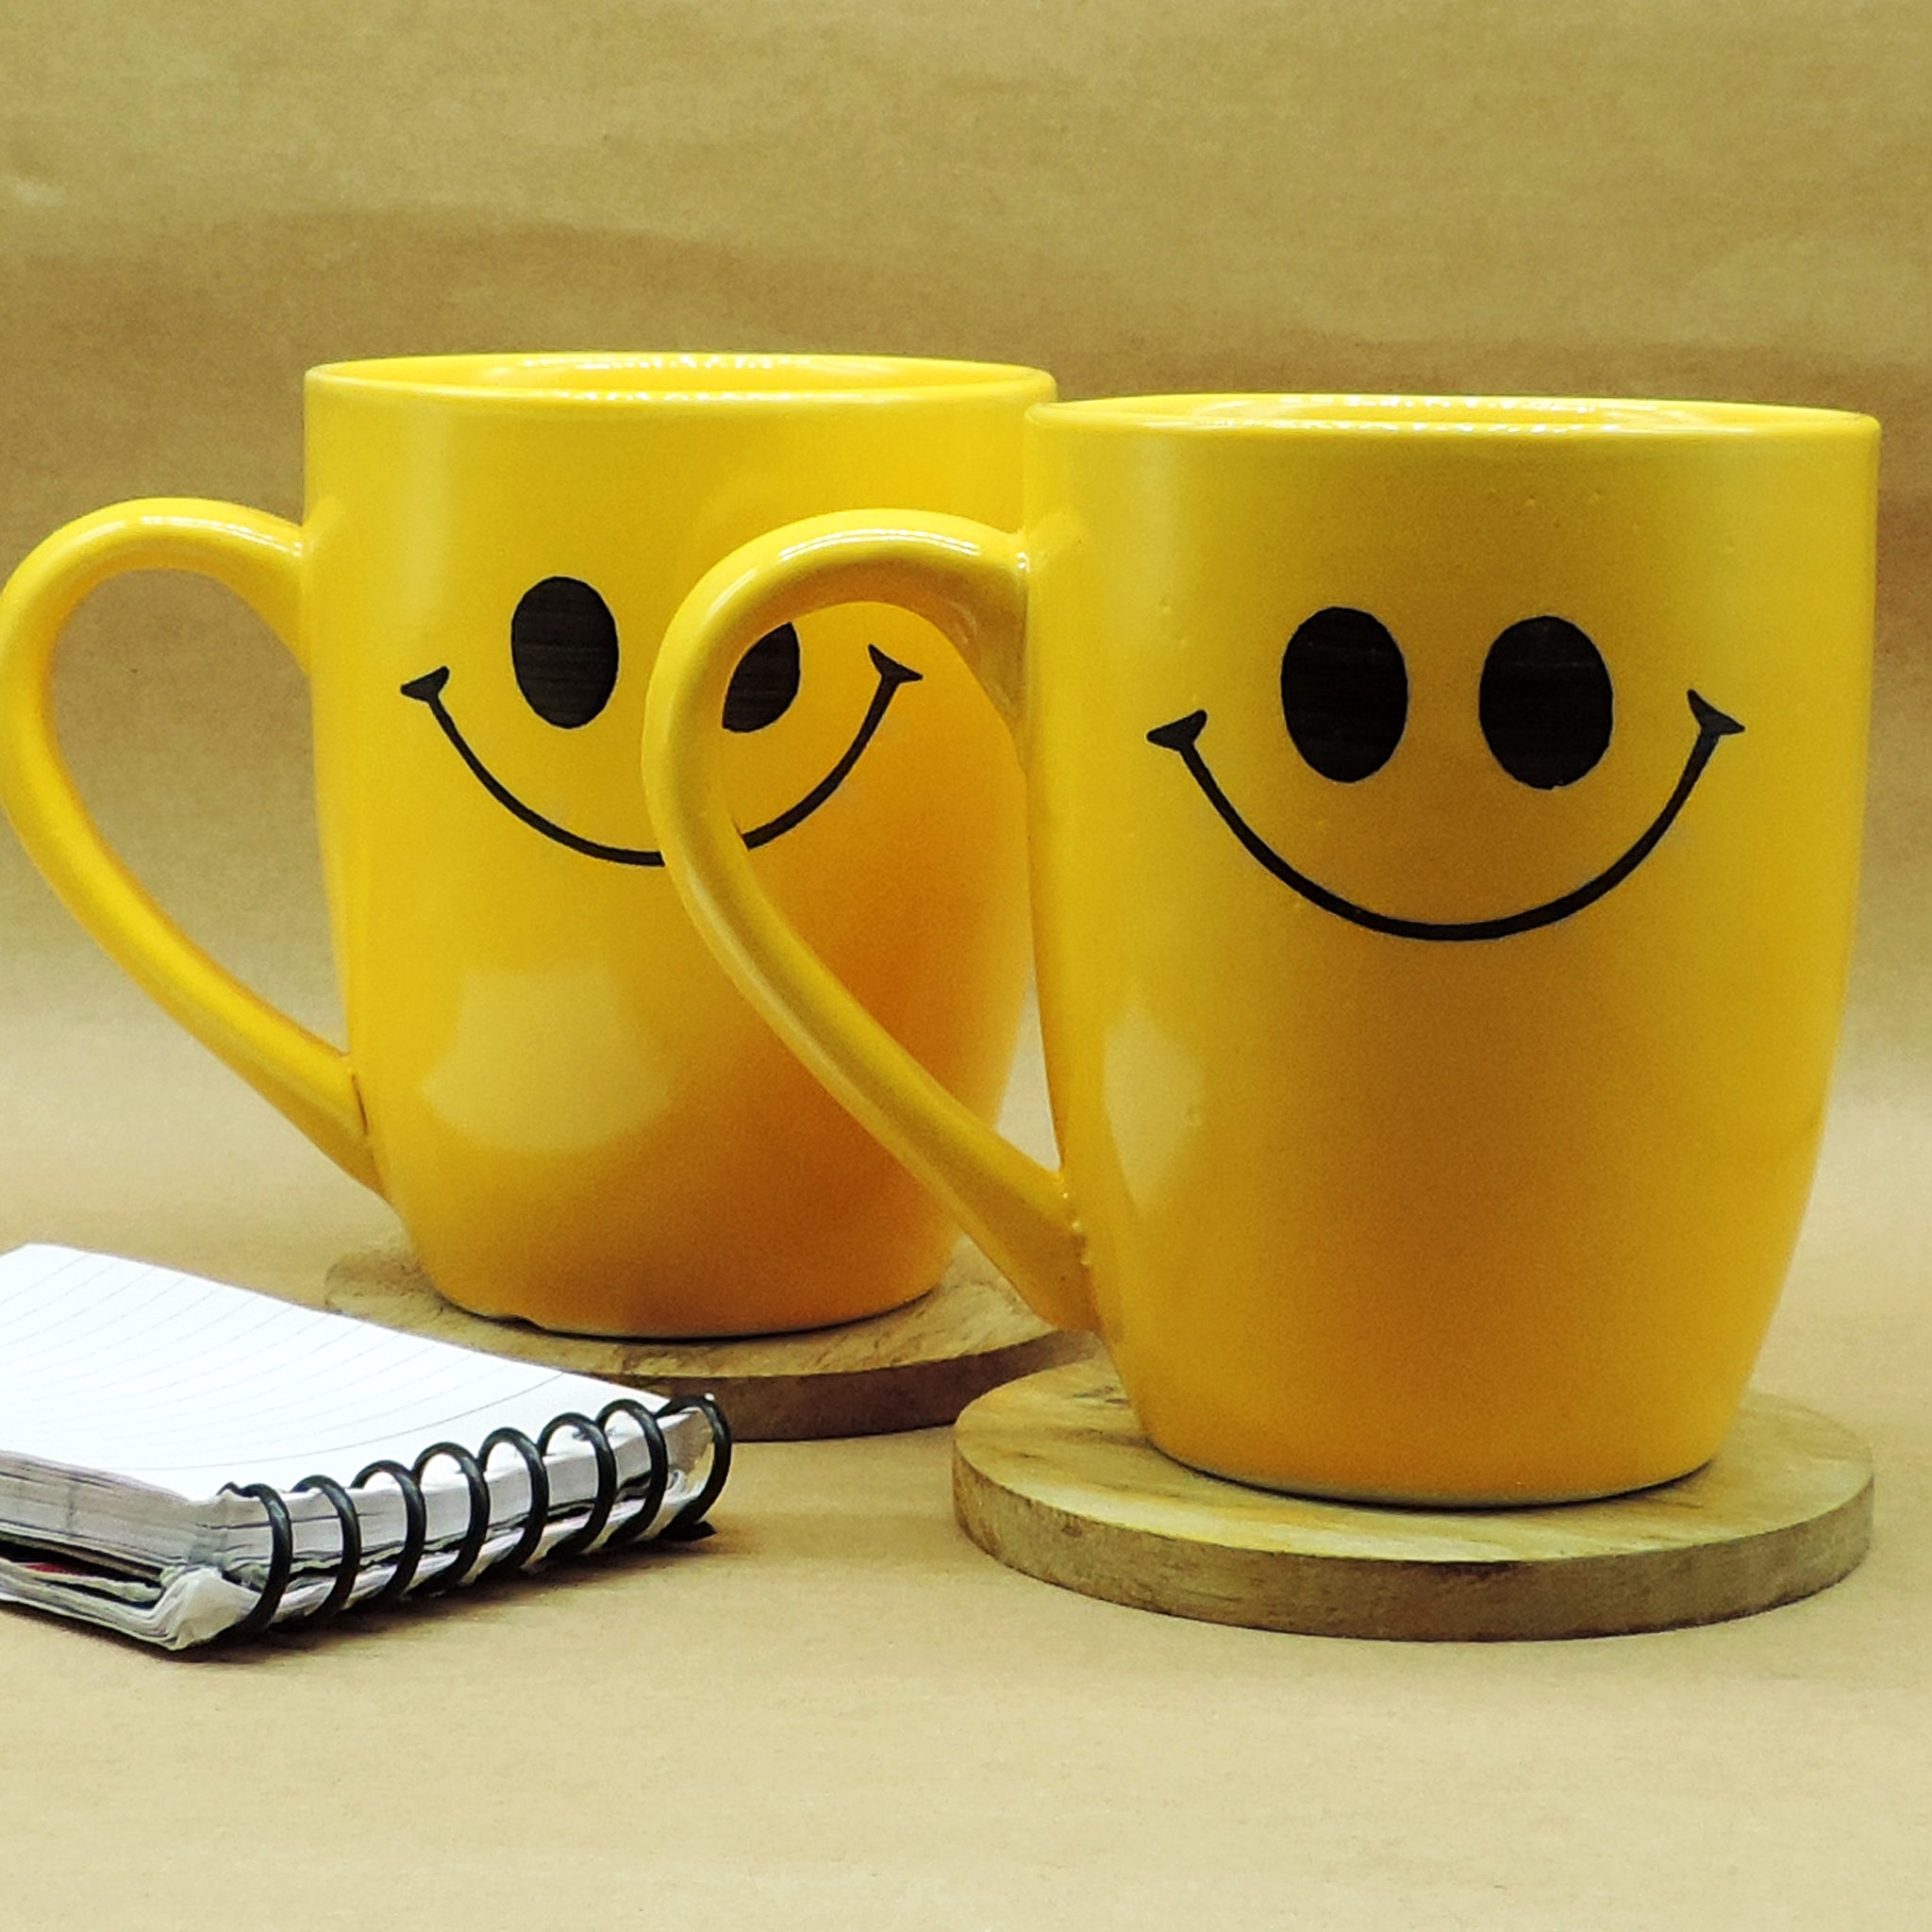 Dinnerware Collection Yellow Smile Mugs Set of 2 - 13x9x11 cm